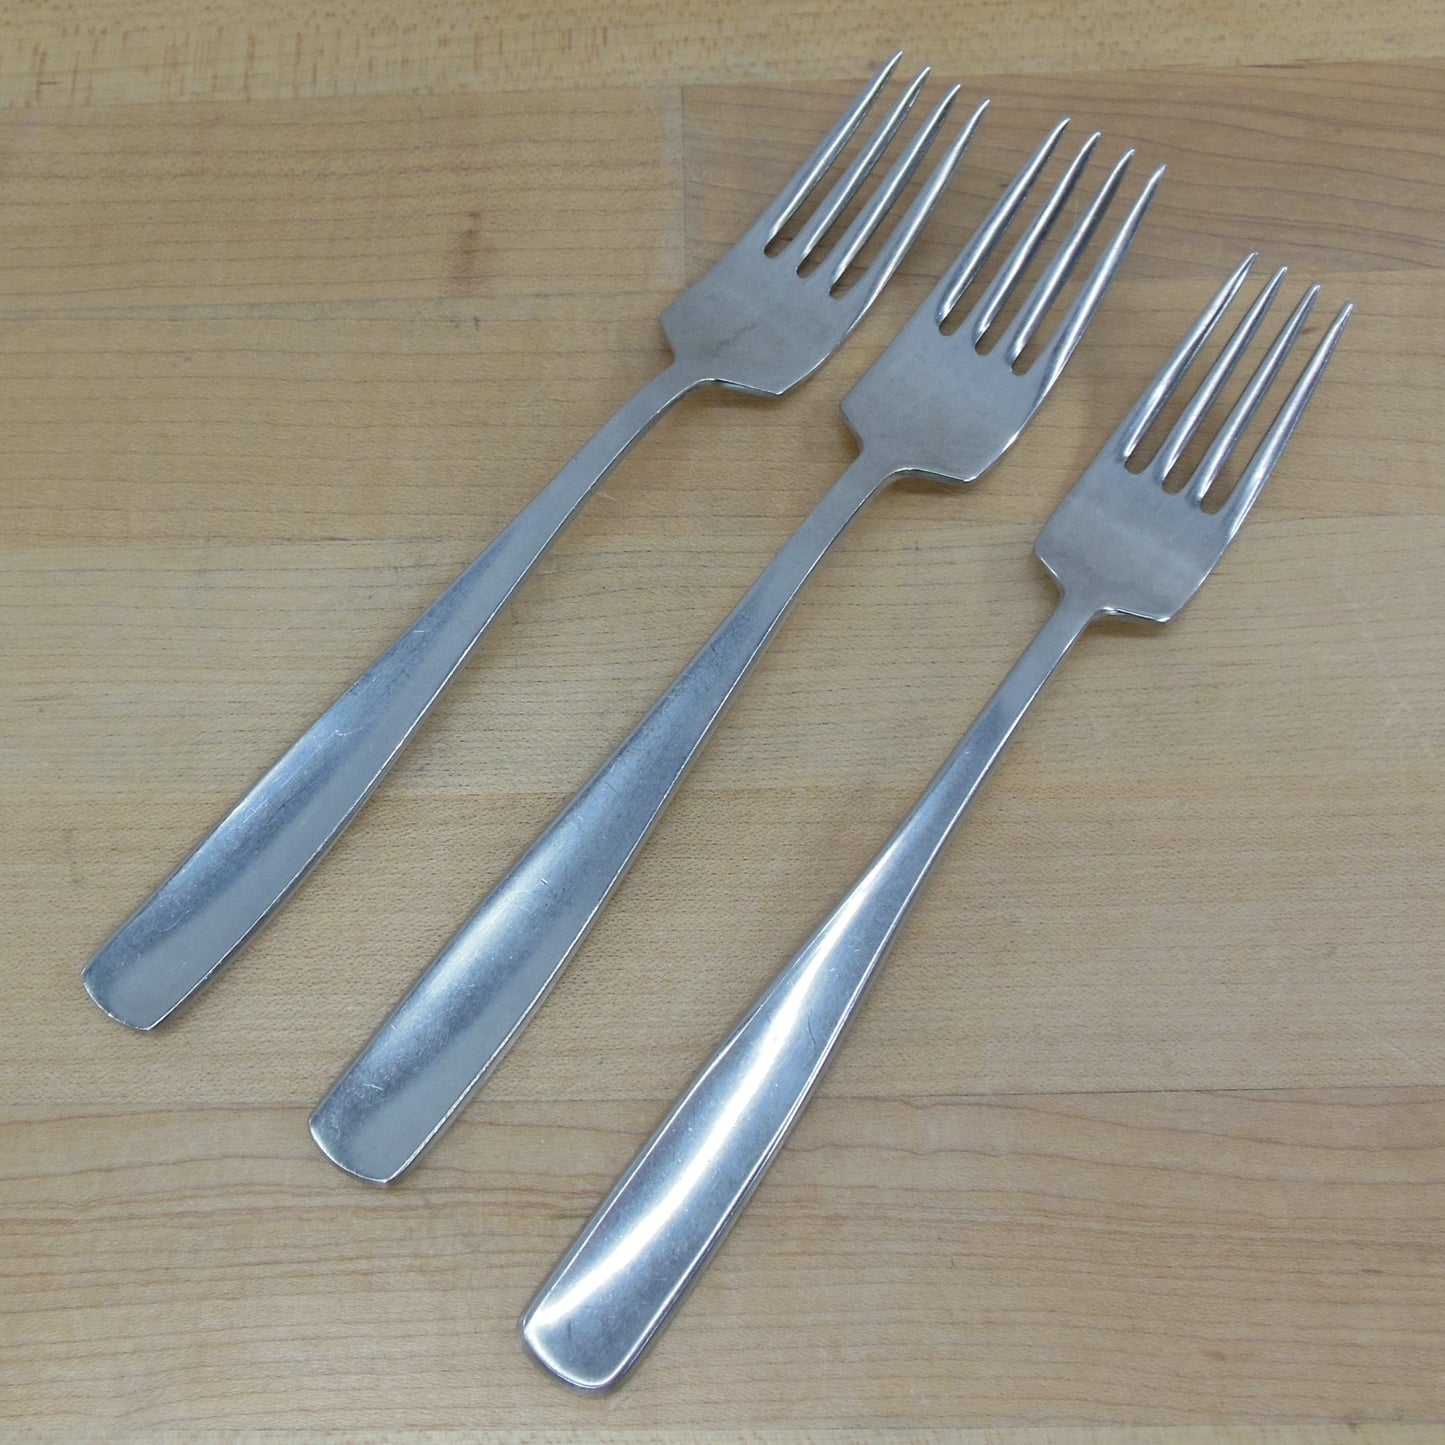 Copy of Gense Sweden Facette 18-8 Stainless Flatware - 3 Dinner Forks